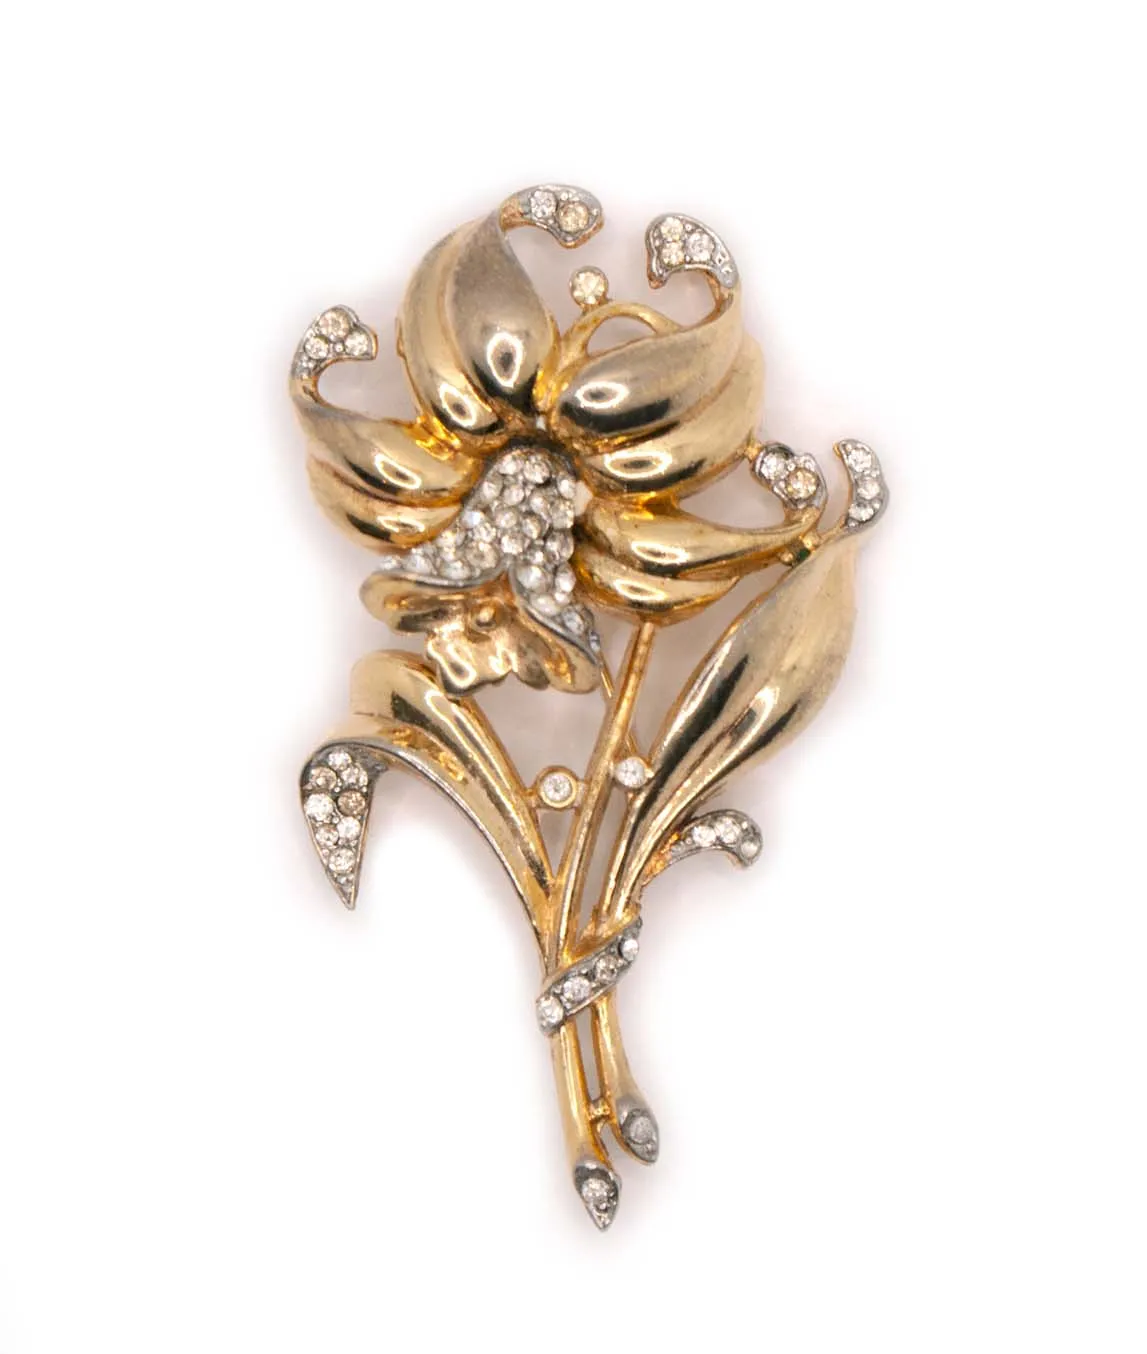 Gold plated Trifari daffodil brooch decorated with clear rhinestone crystals